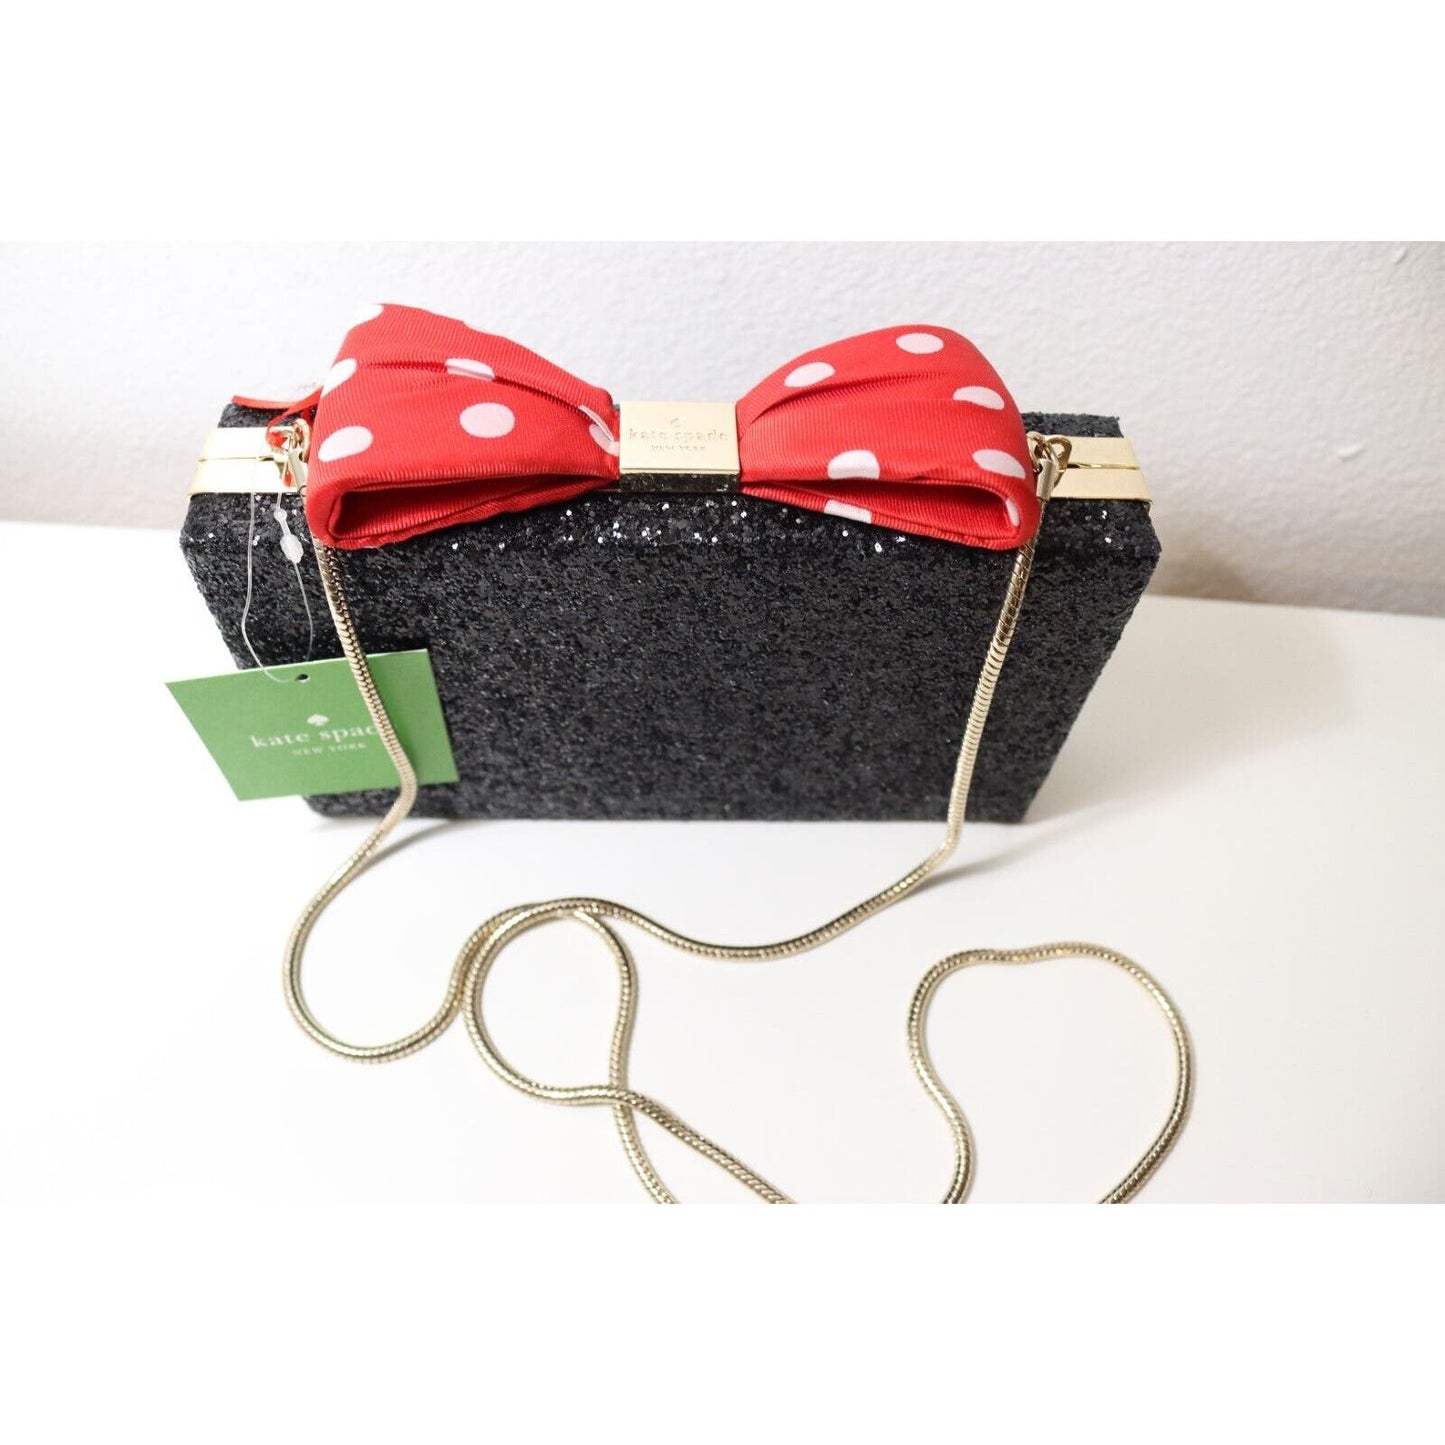 New Kate Spade x Disney Minnie Mouse Bow Clutch Crossbody Handbag Purse